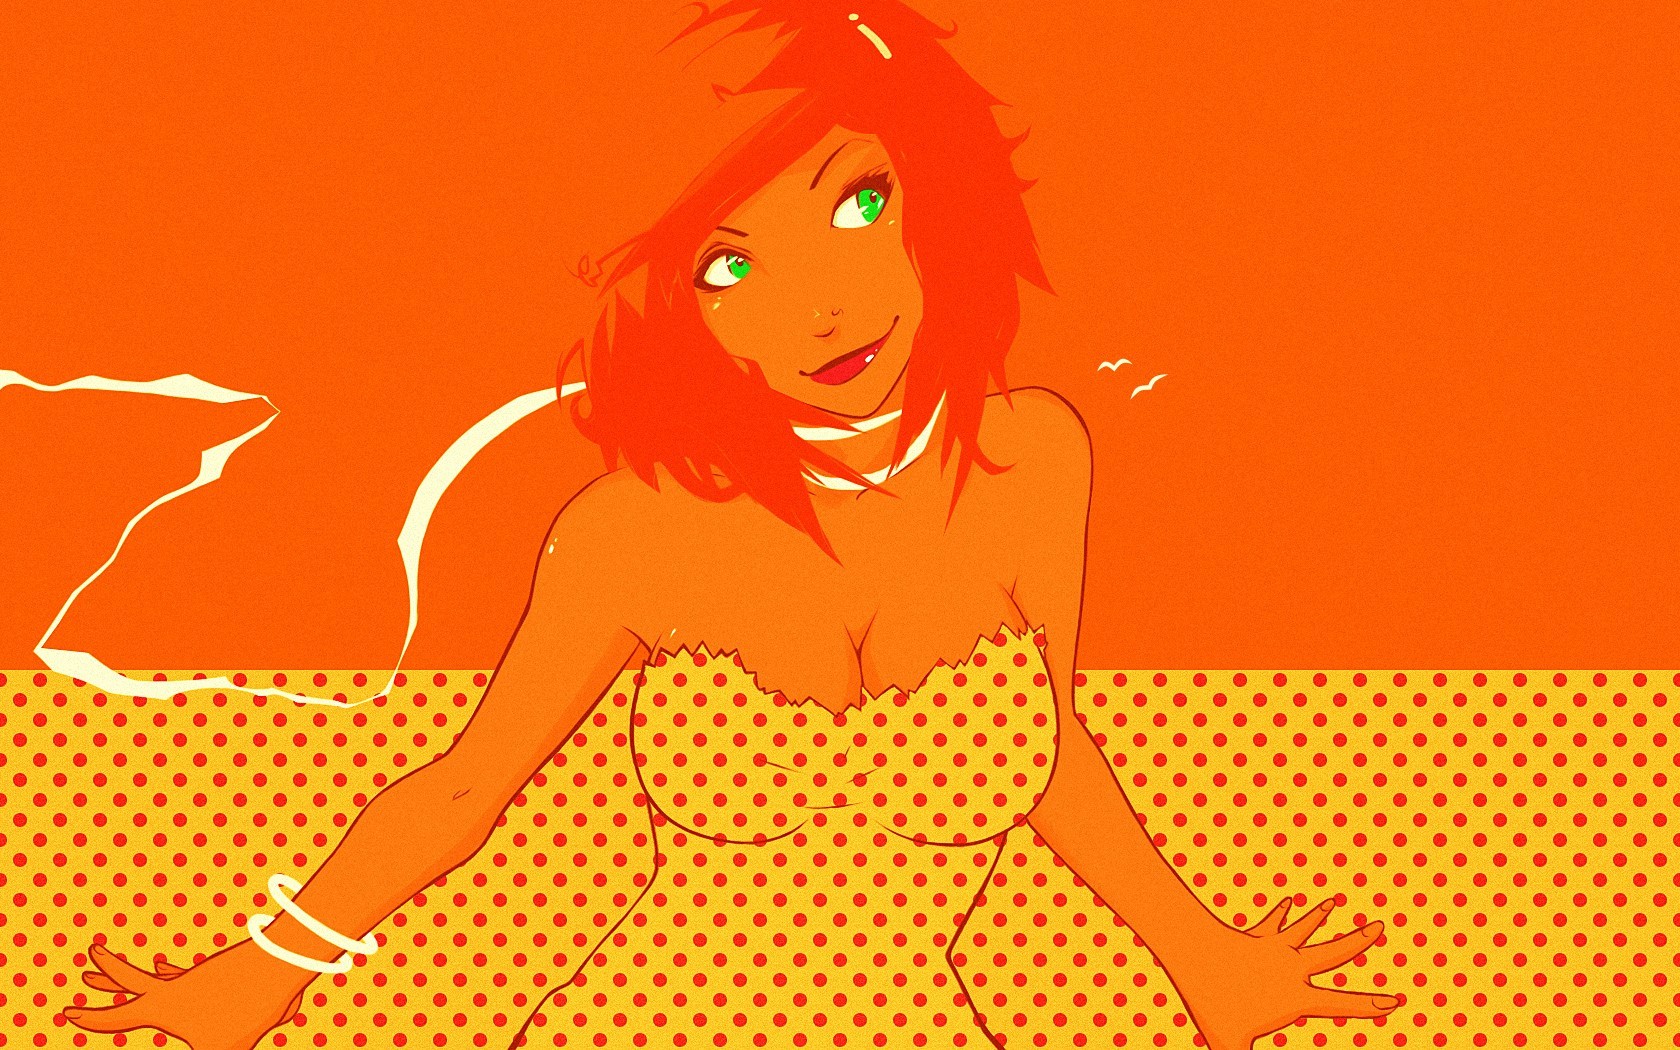 General 1680x1050 redhead green eyes orange background cleavage drawing orange yellow polka dots women boobs artwork looking away red lipstick